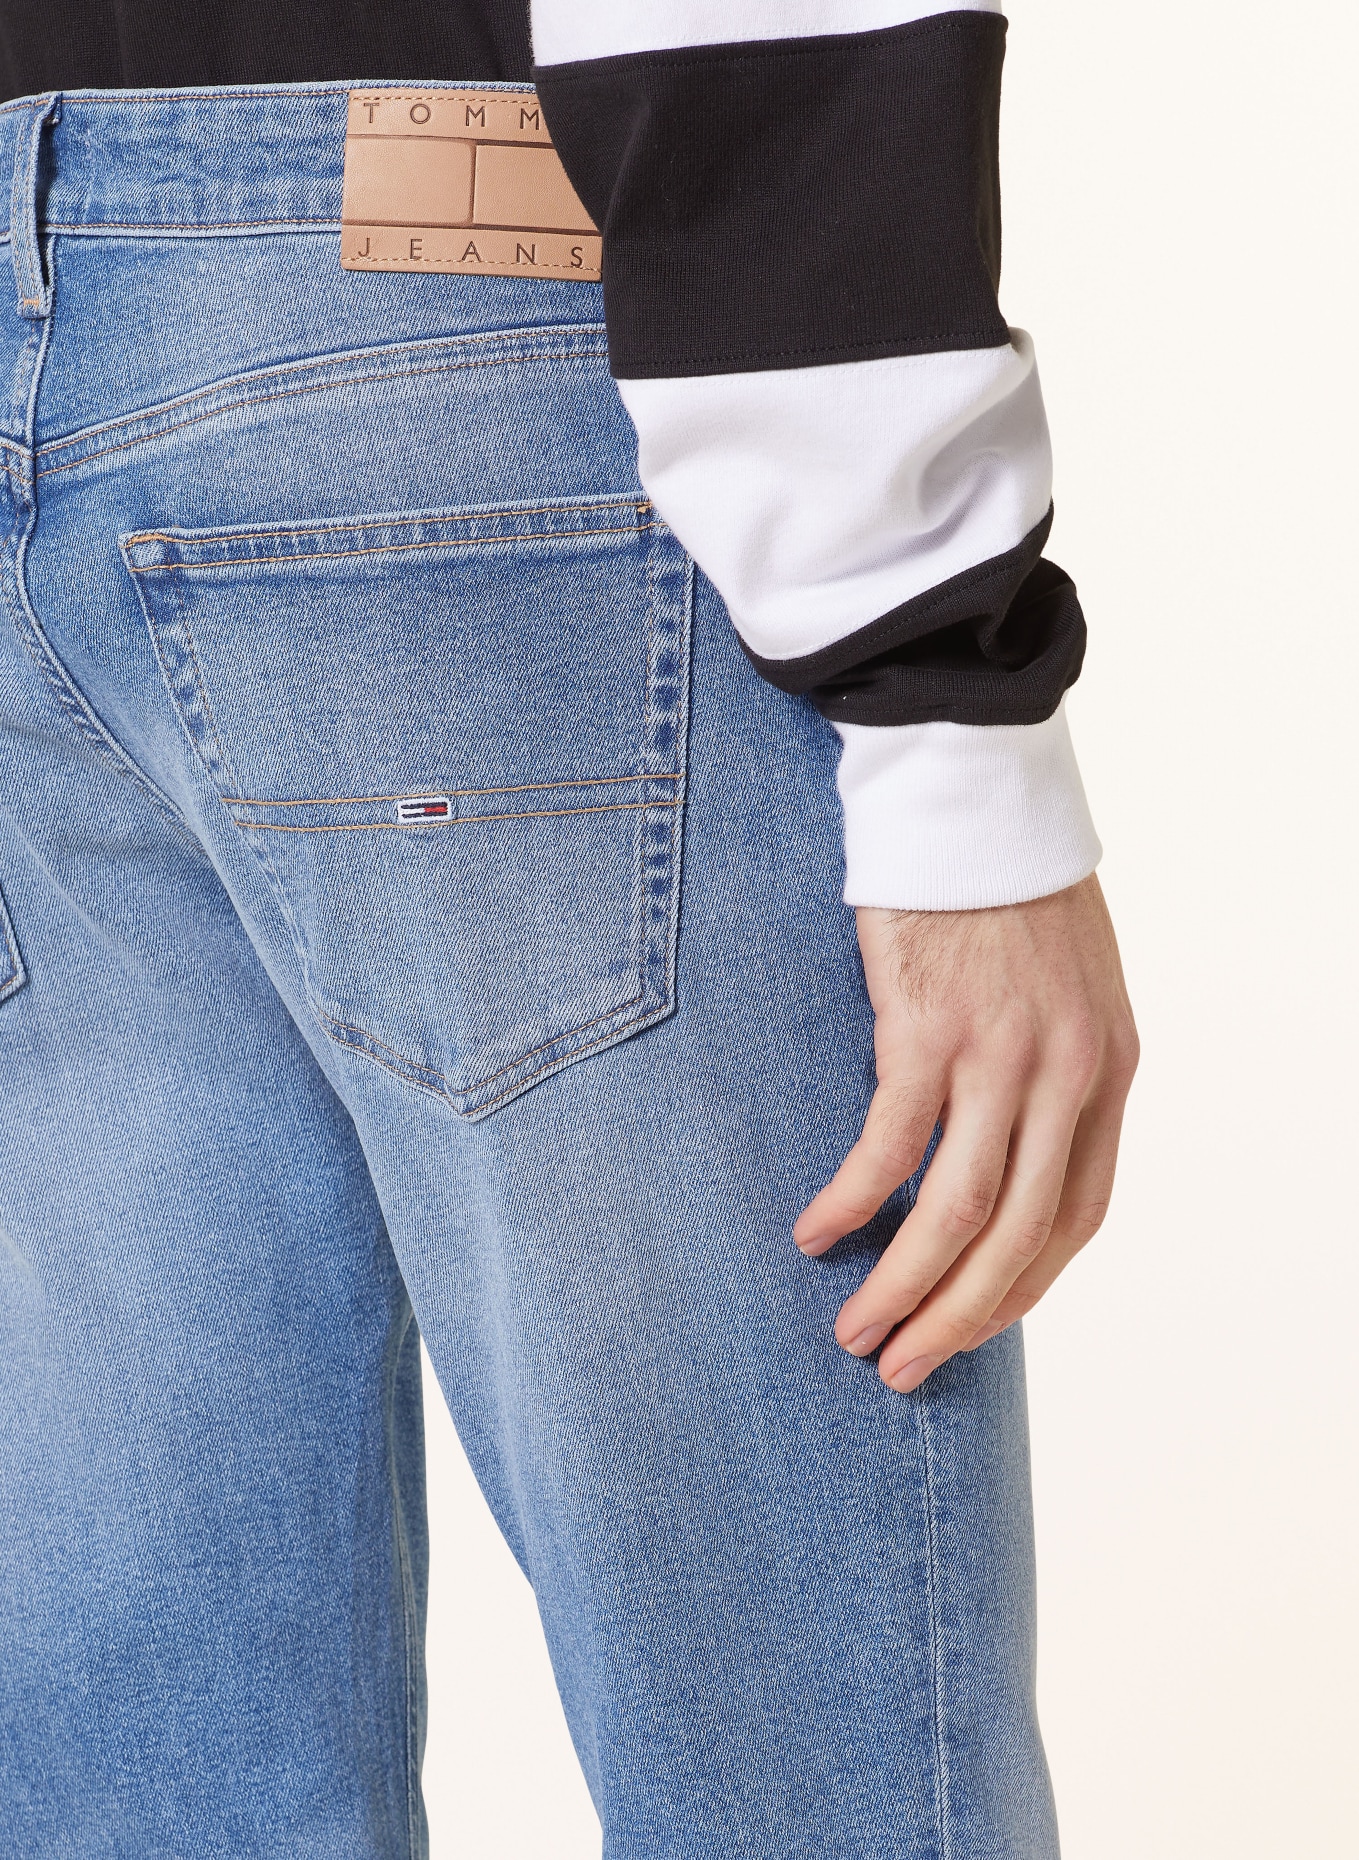 TOMMY JEANS Jeans SCANTON Slim Fit, Farbe: 1AB Denim Light (Bild 6)